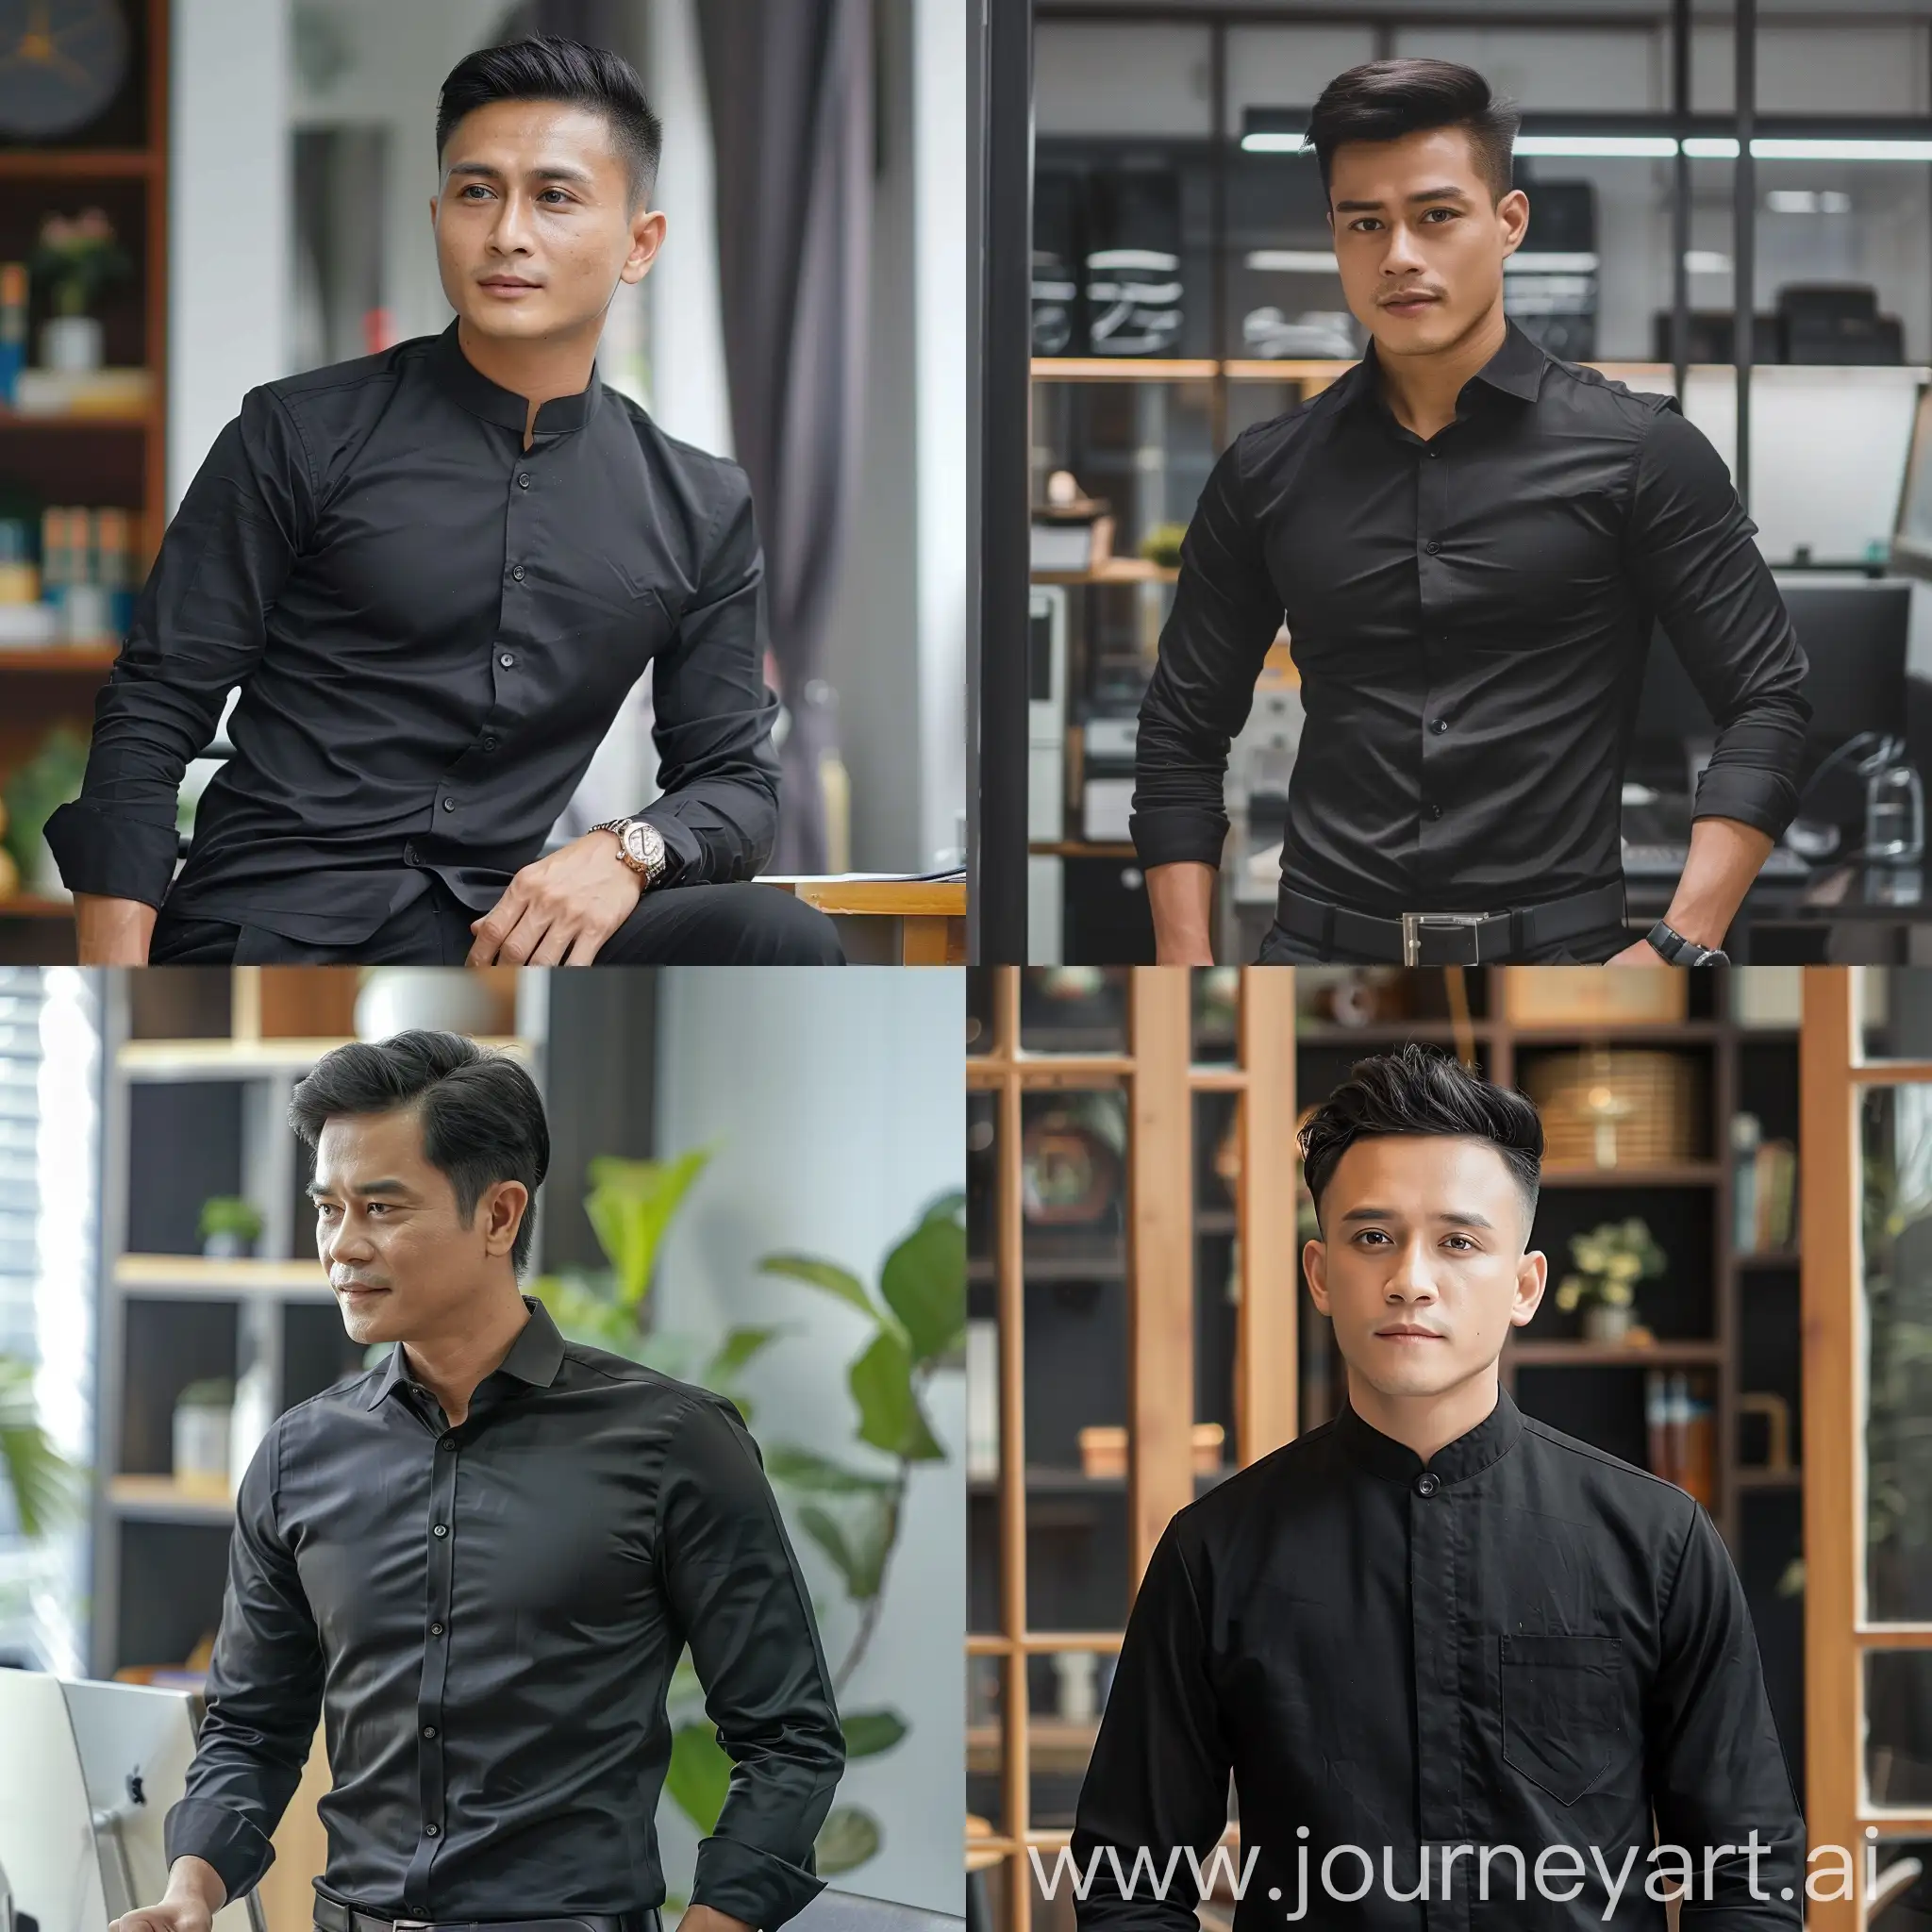 /imagine Vietnamese gentlemen , working on office, long shirt black color, 40 year old , handsome